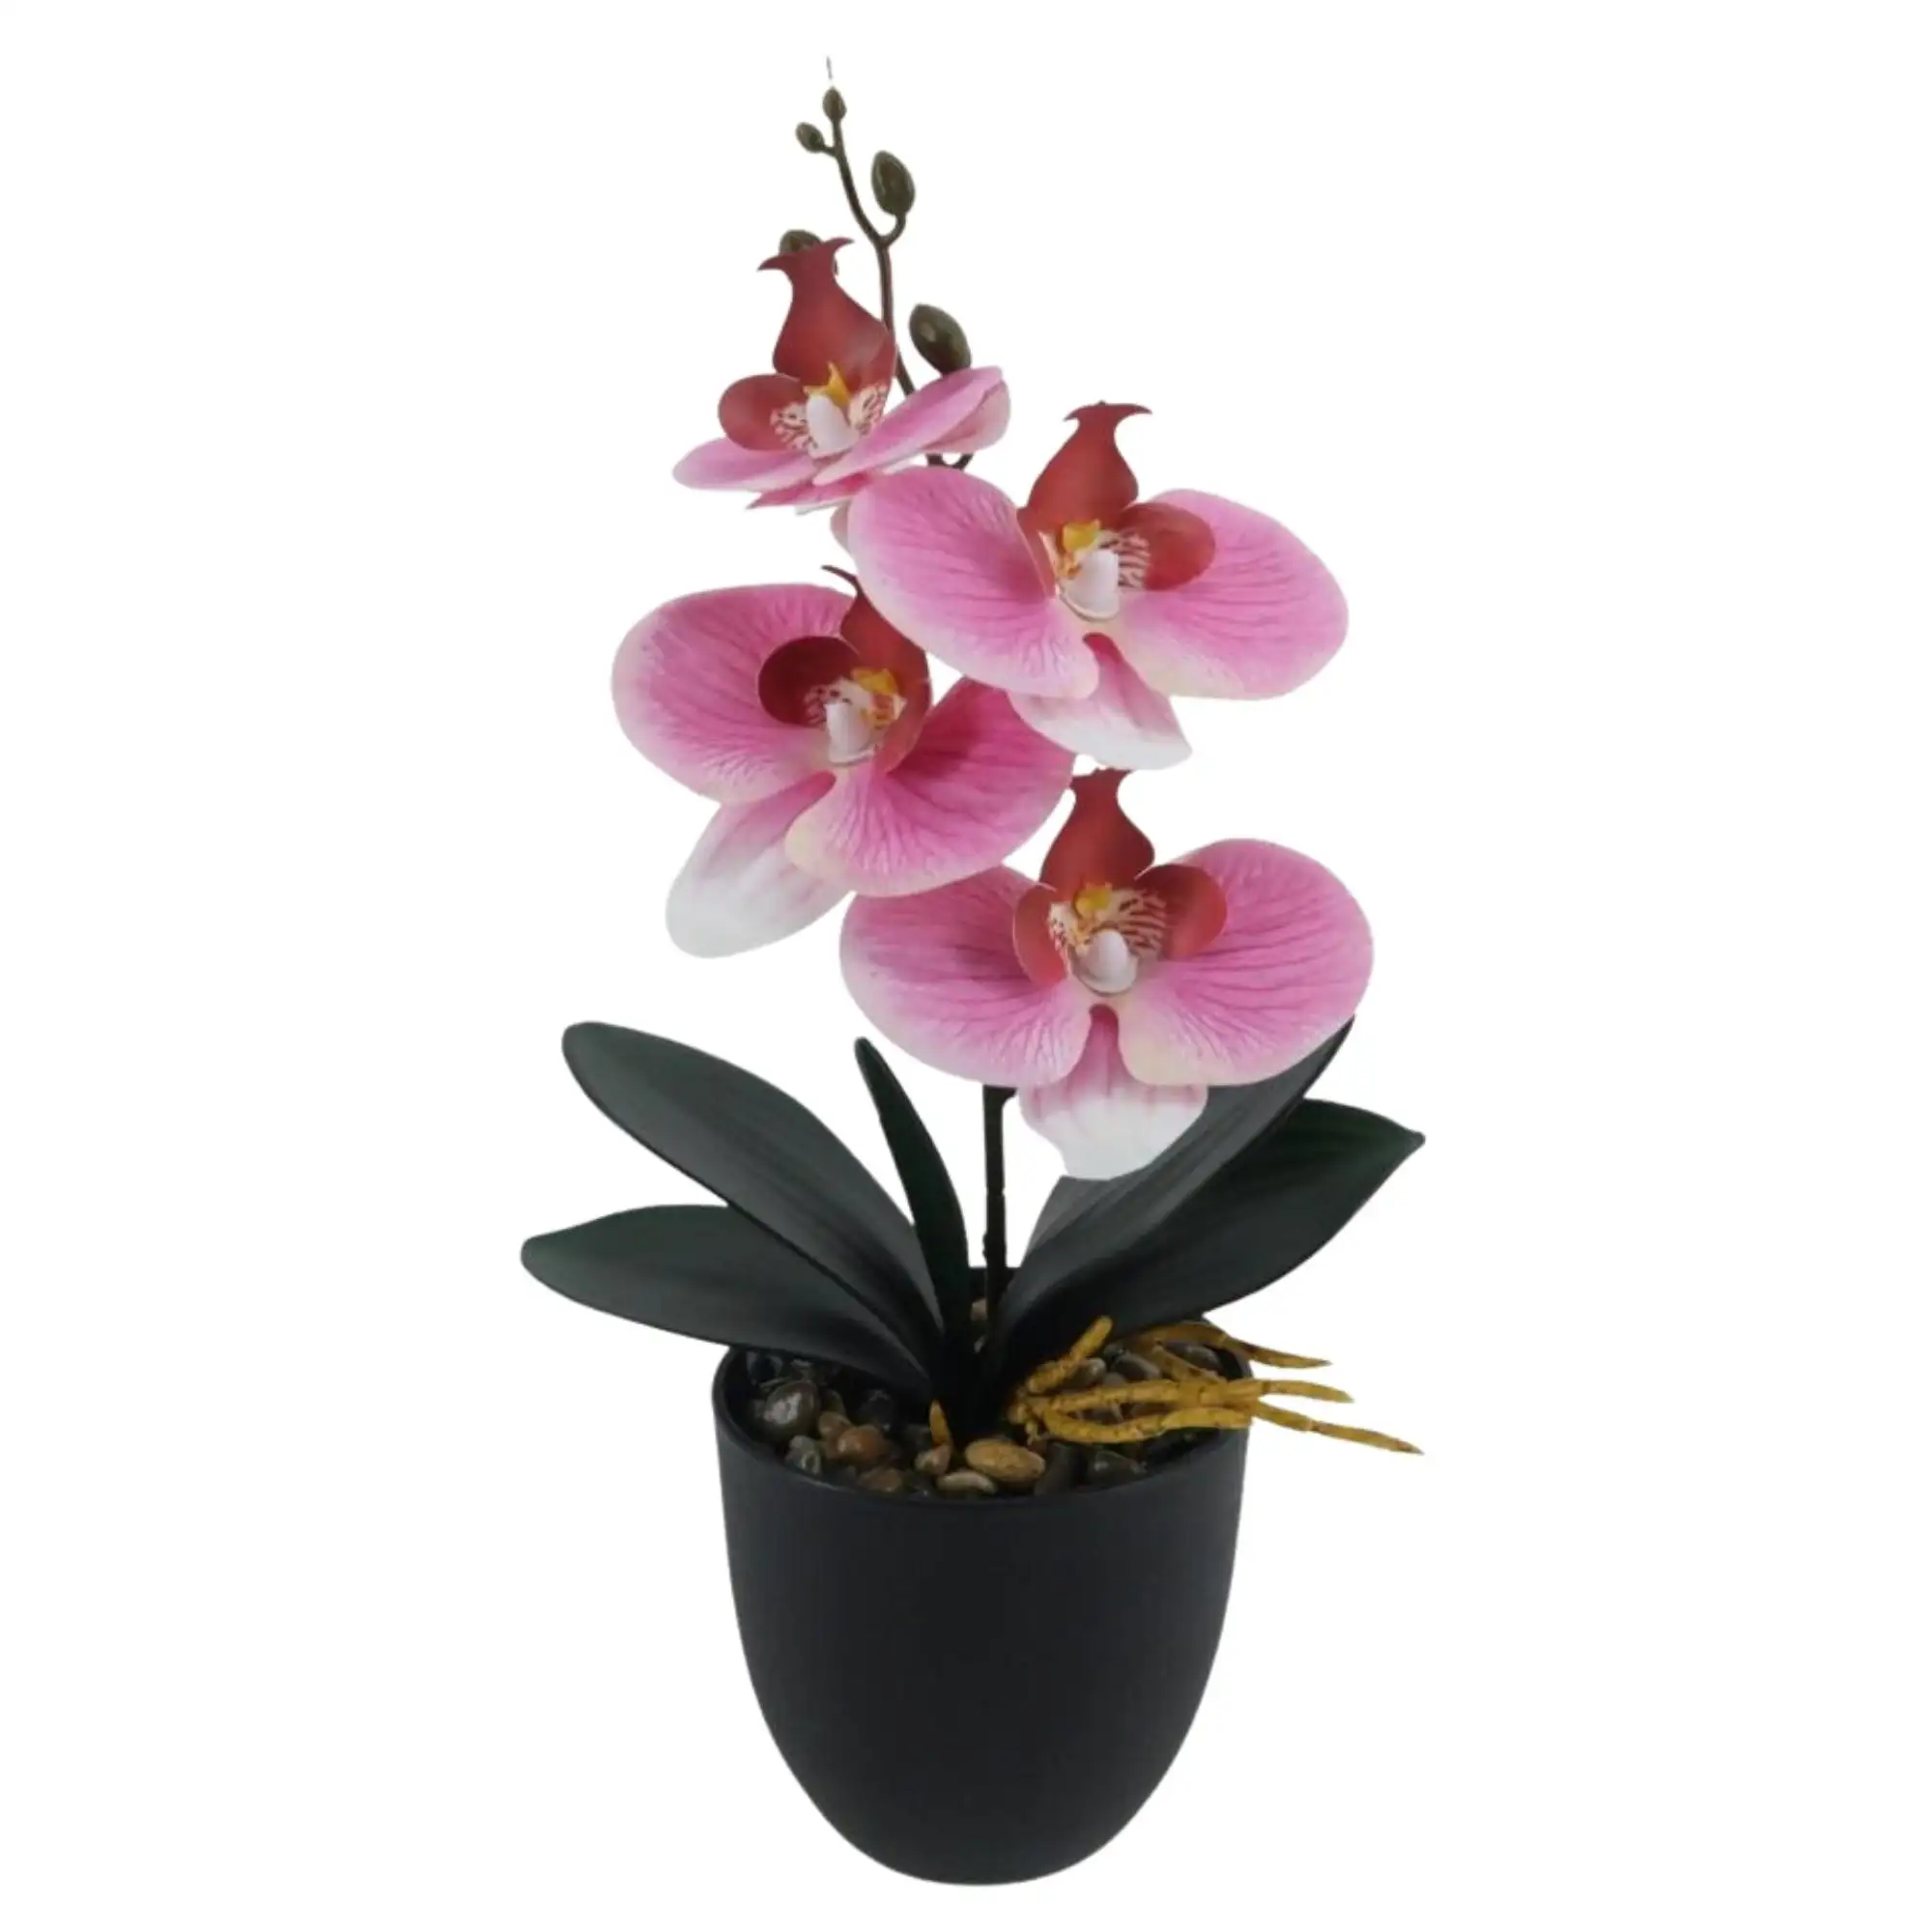 Venda quente Flor Artificial Potted Moth Orchid Flower Artificial Phalaenopsis Orchid Flower in Pot para Home Office Decor